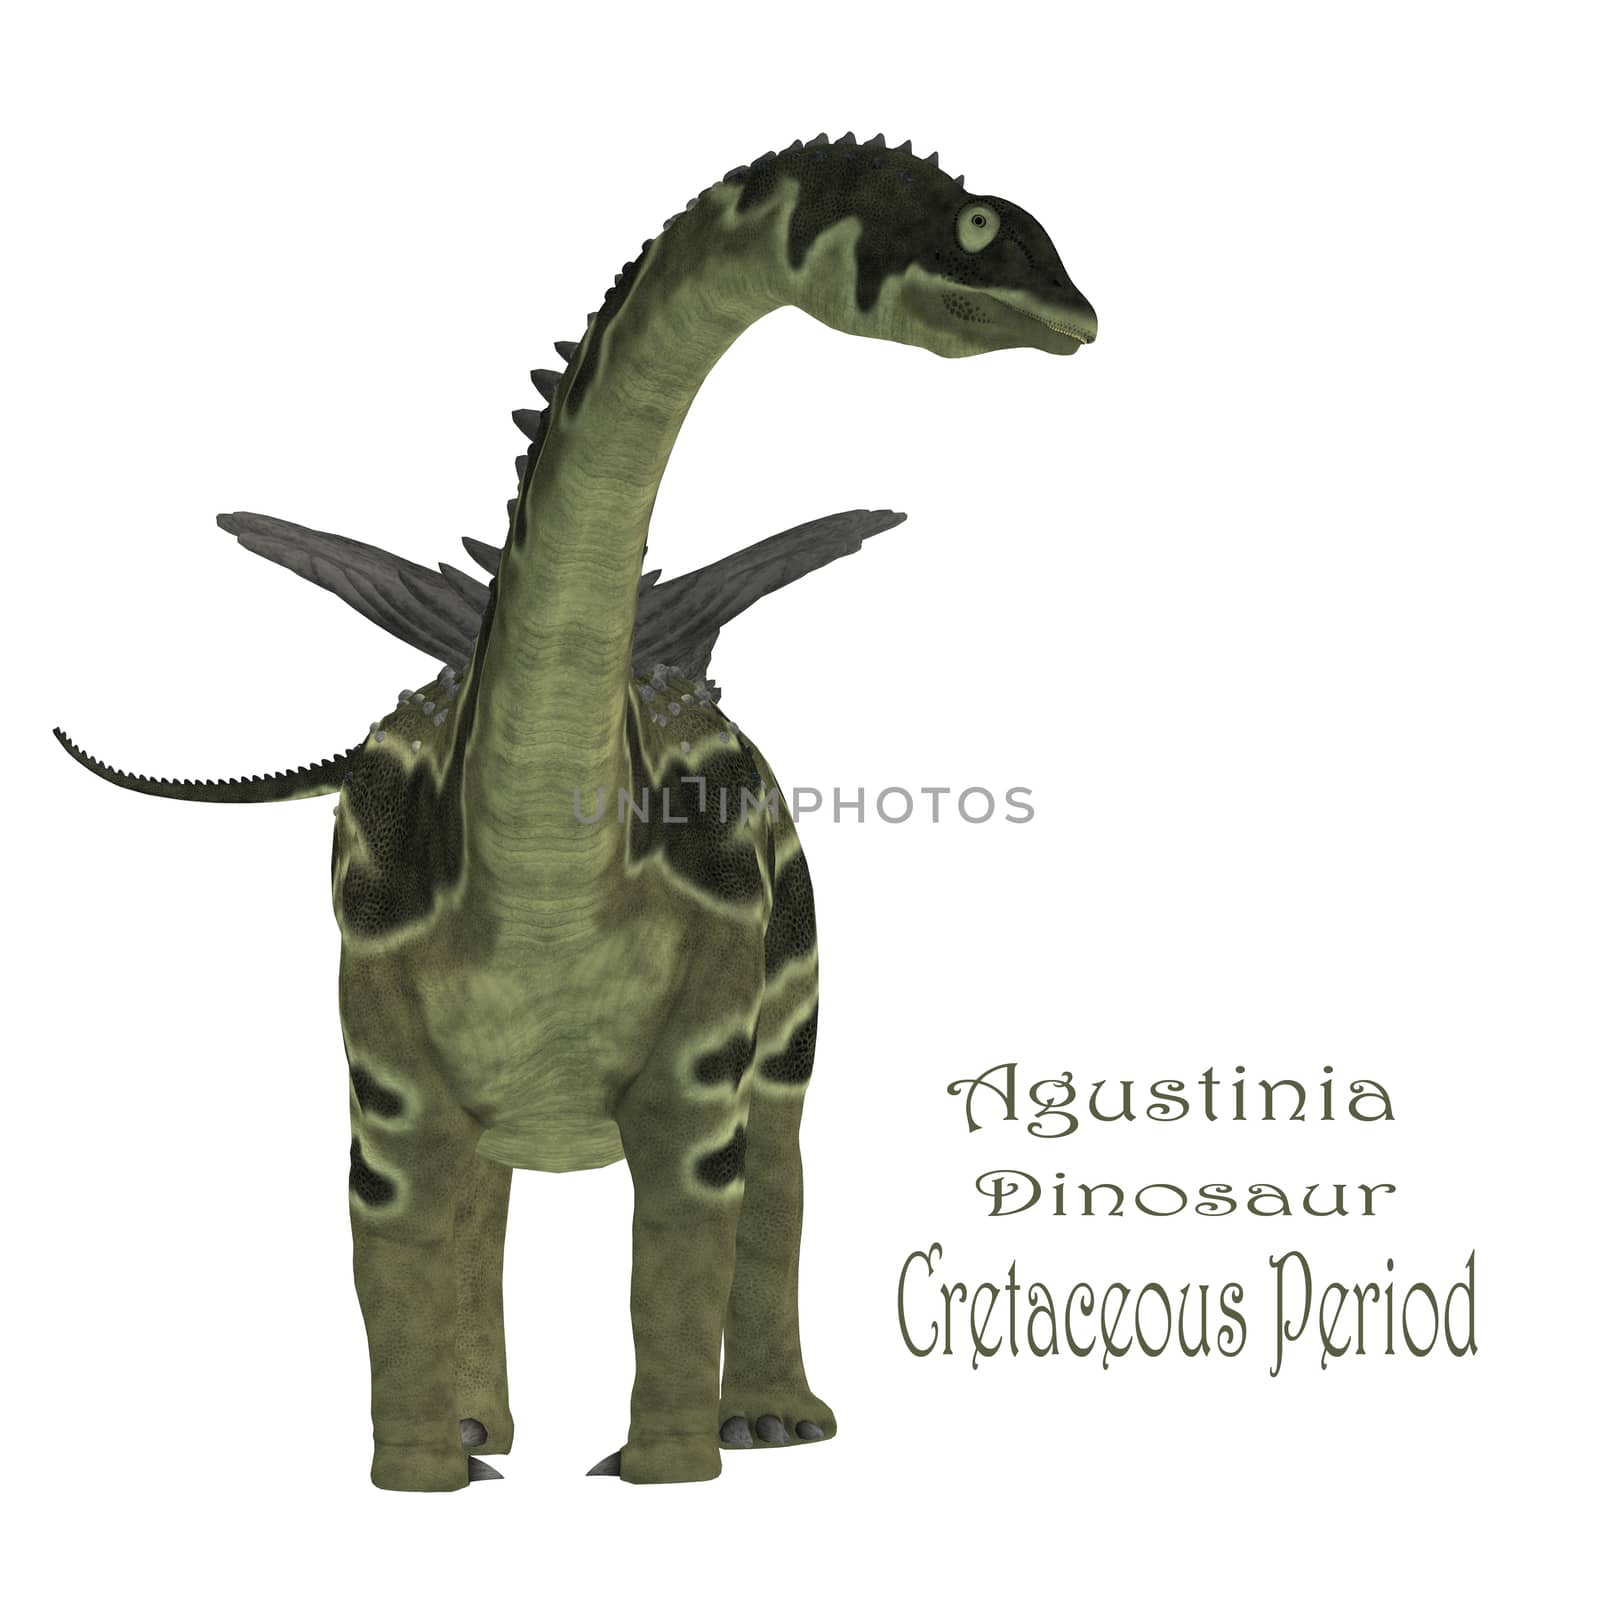 Agustinia Dinosaur with Font by Catmando